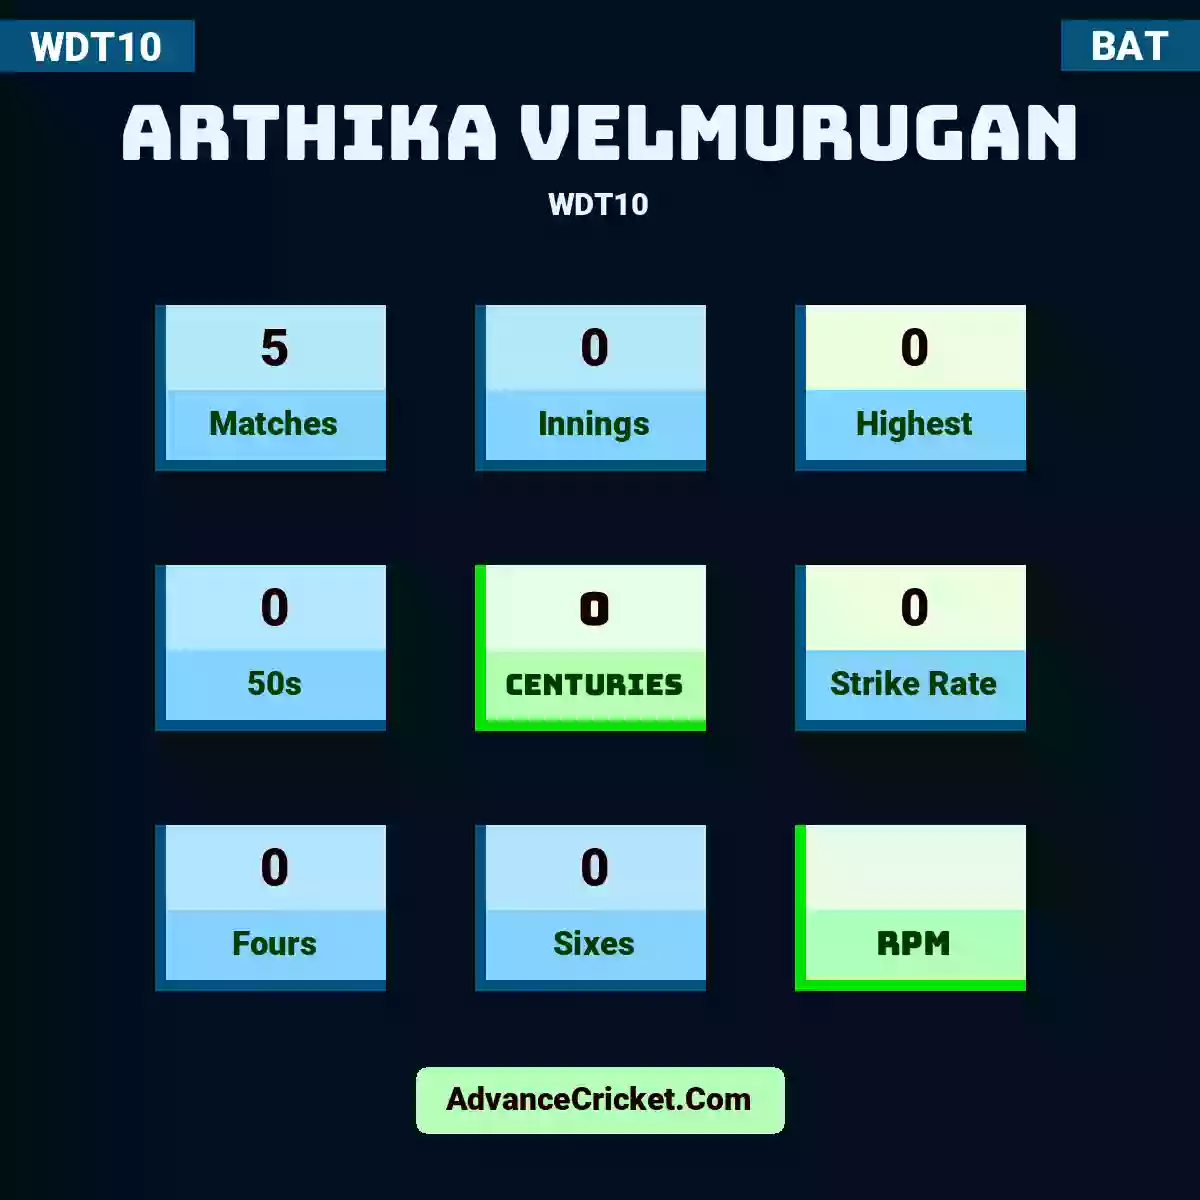 Arthika Velmurugan WDT10 , Arthika Velmurugan played 5 matches, scored 0 runs as highest, 0 half-centuries, and 0 centuries, with a strike rate of 0. A.Velmurugan hit 0 fours and 0 sixes.